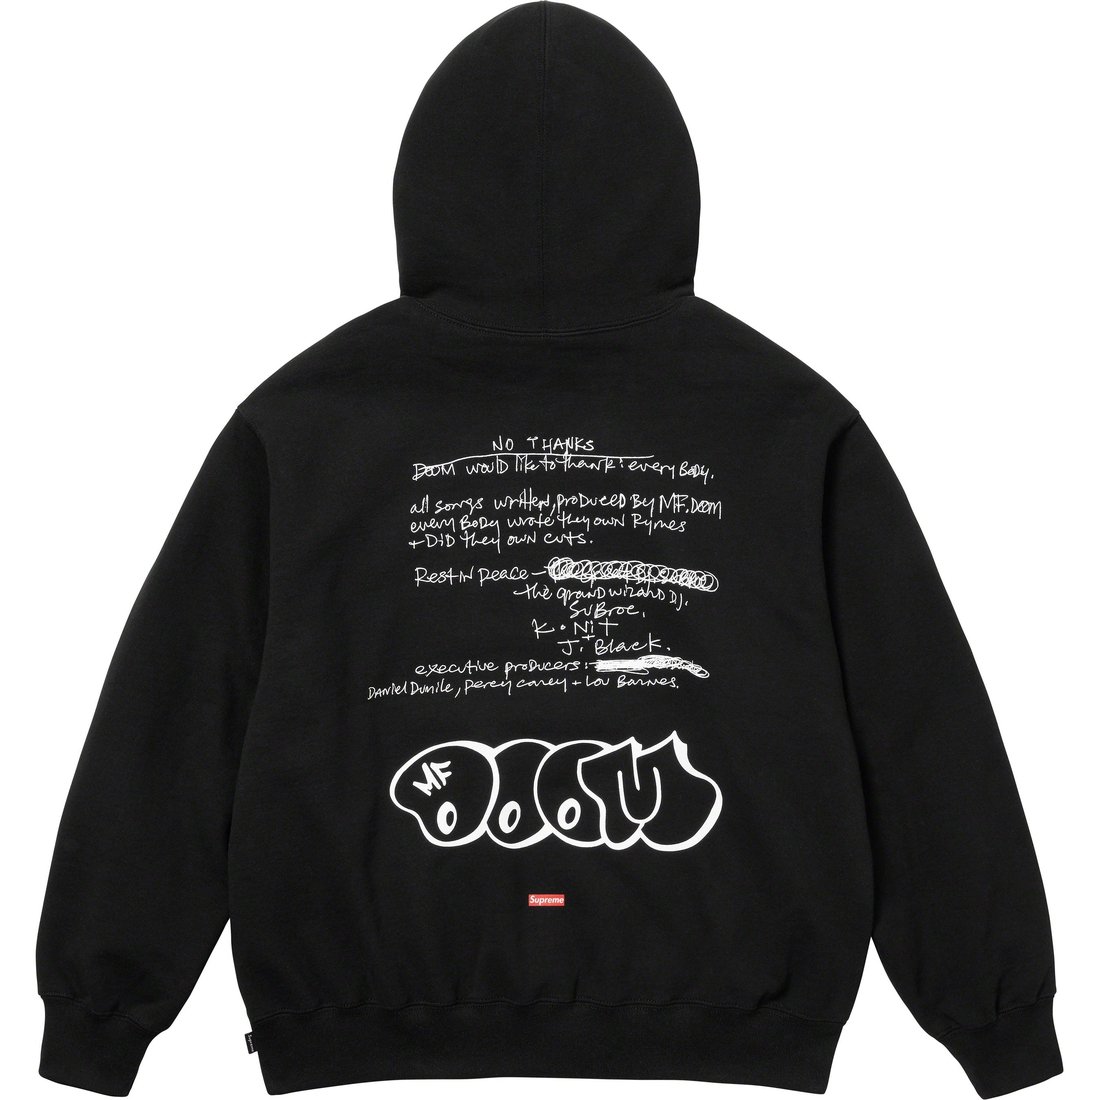 Details on MF DOOM Hooded Sweatshirt Black from fall winter 2023 (Price is $168)